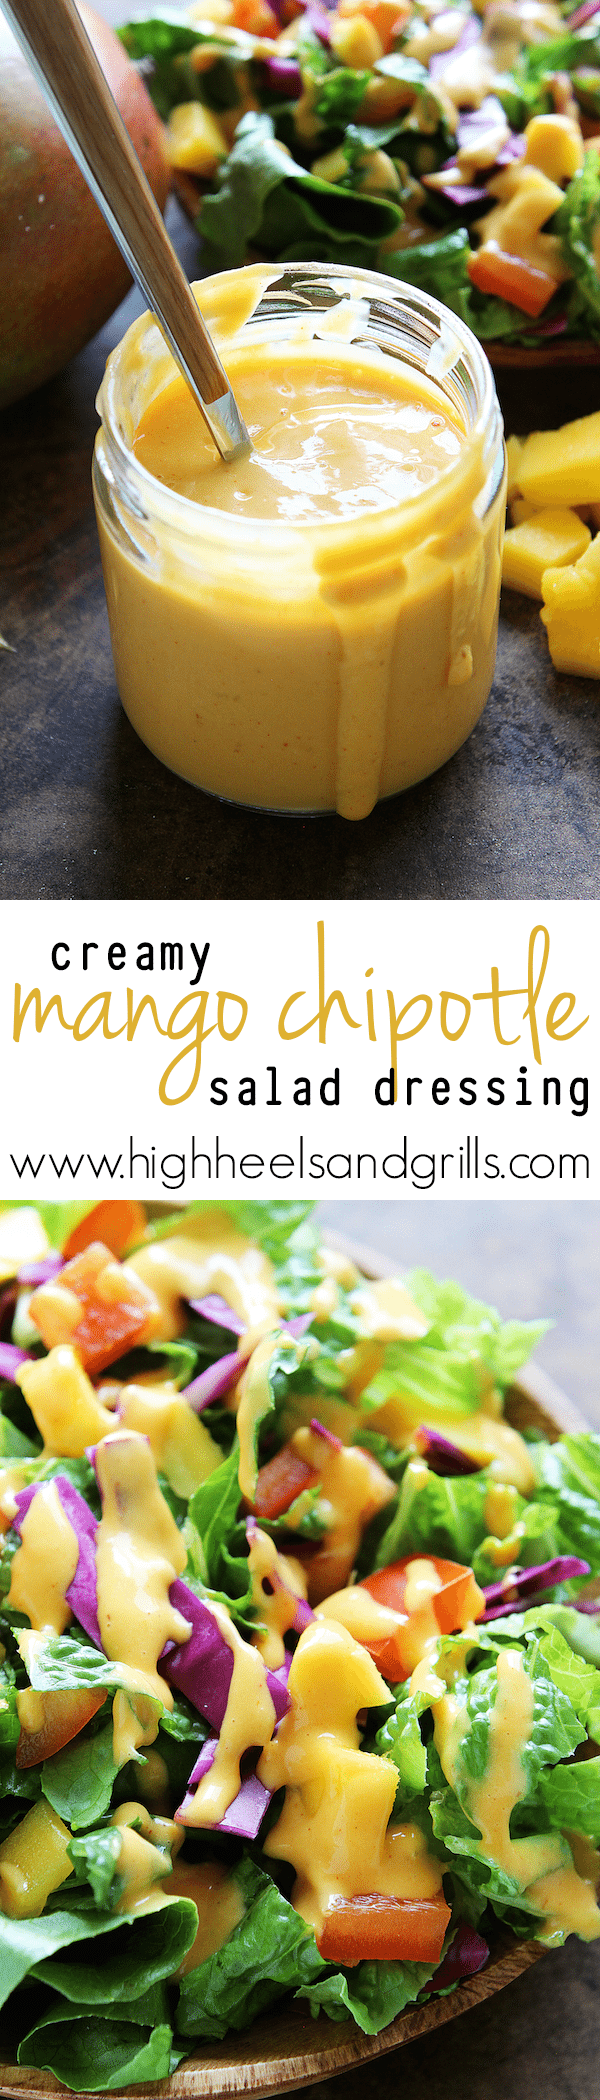 Creamy Mango Chipotle Salad Dressing Collage